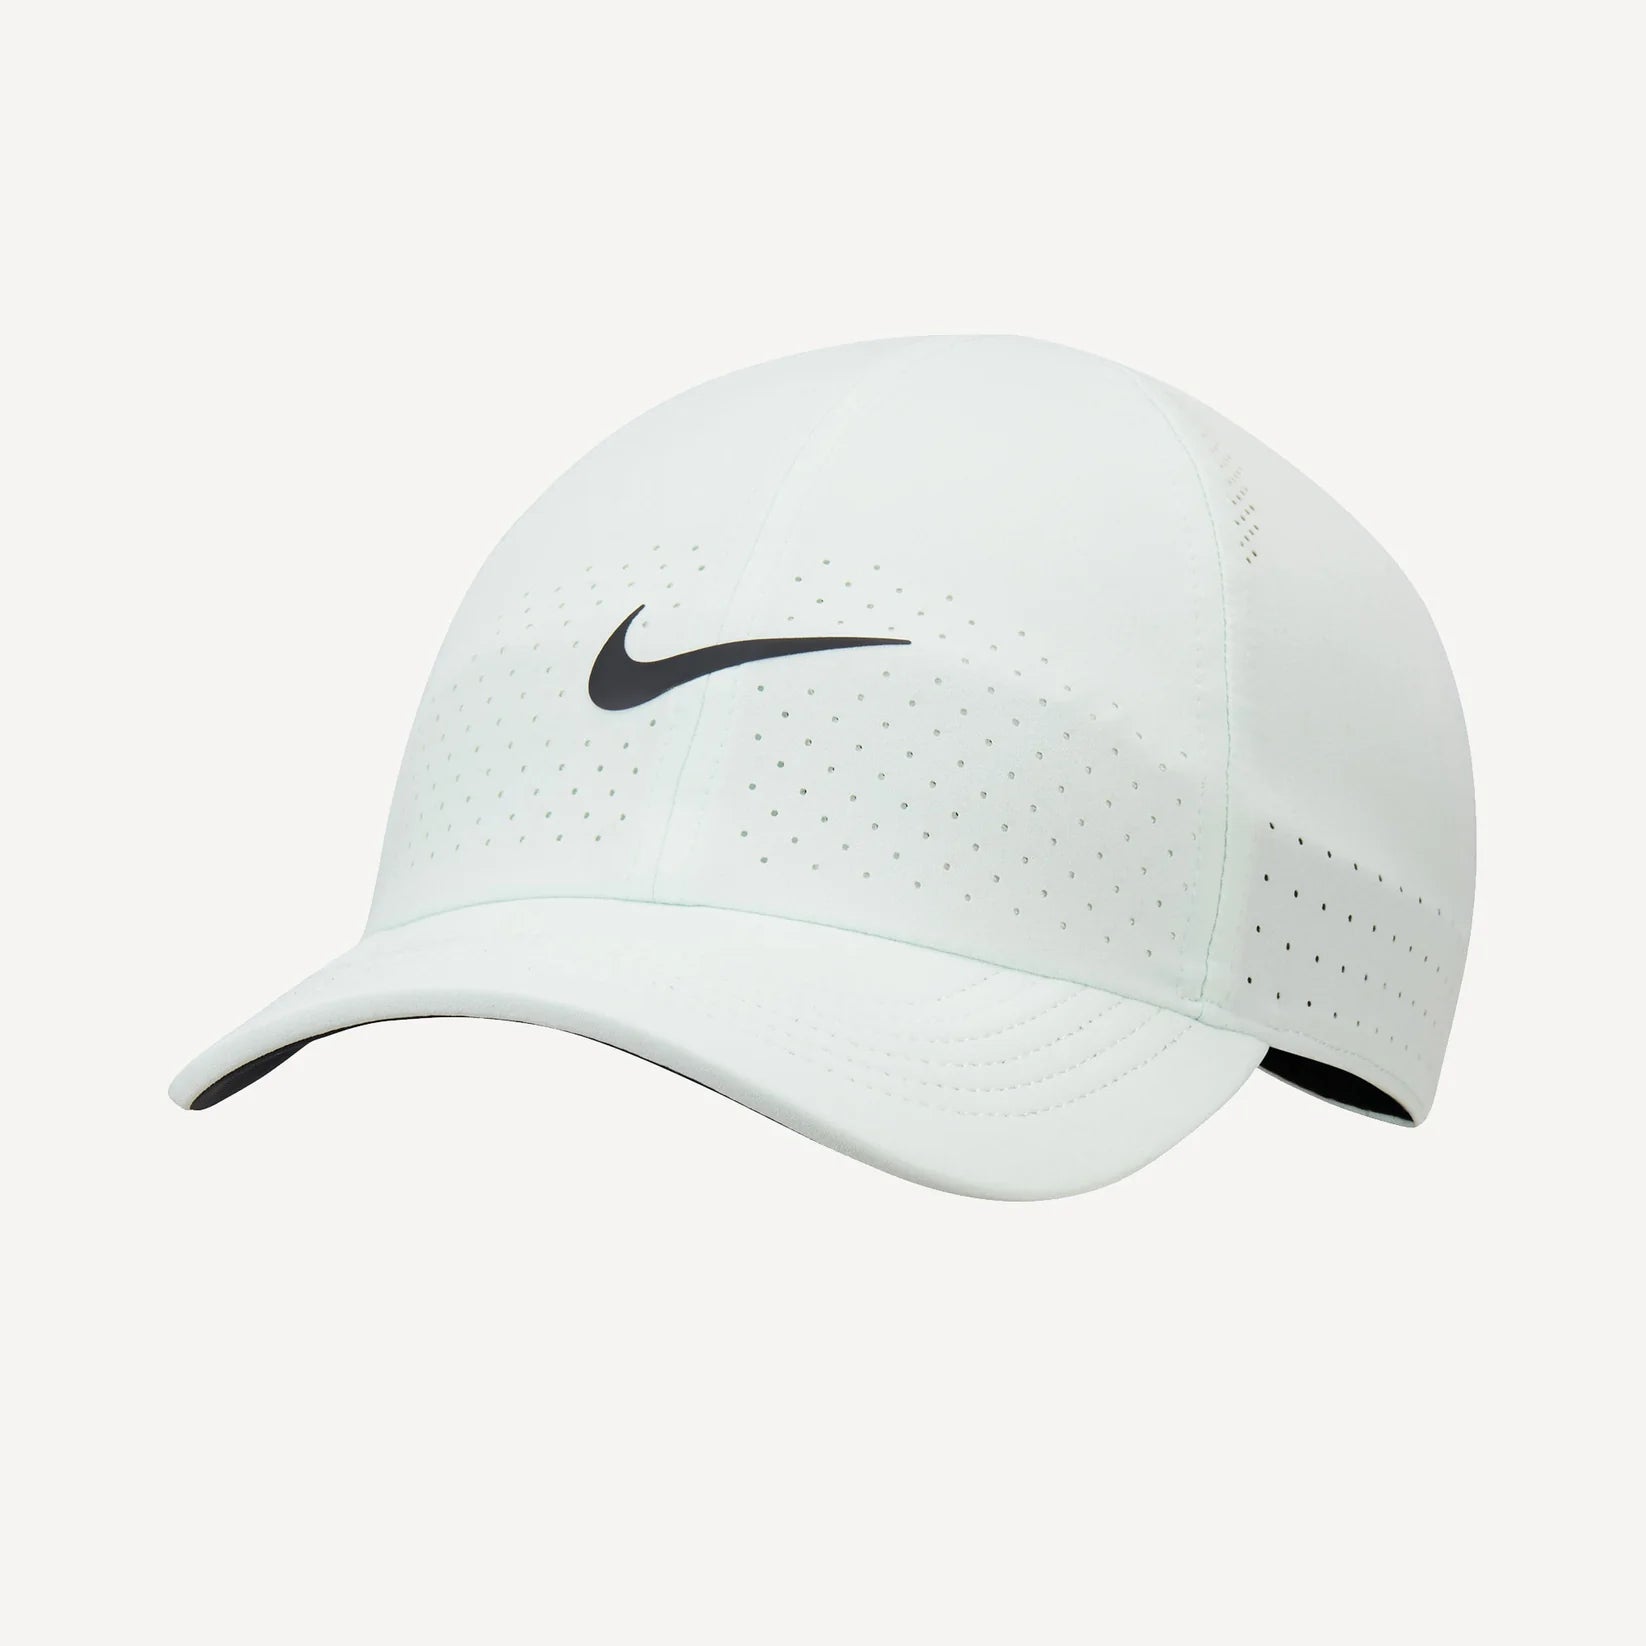 Nike Court Aerobill Advantage Men s Tennis Cap